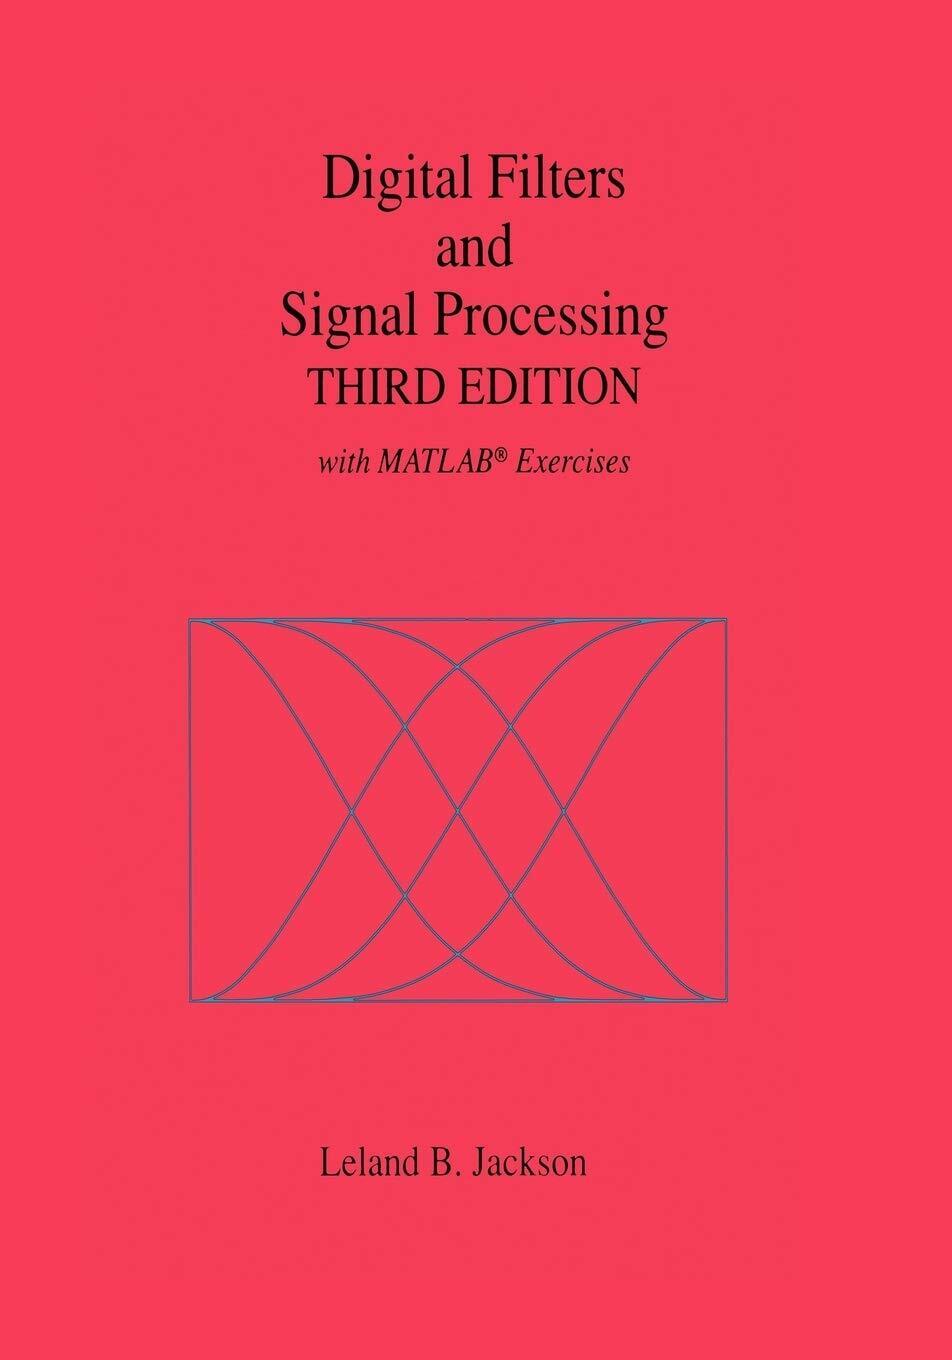 Digital Filters and Signal Processing - Leland B. Jackson - Springer, 2010 libro usato